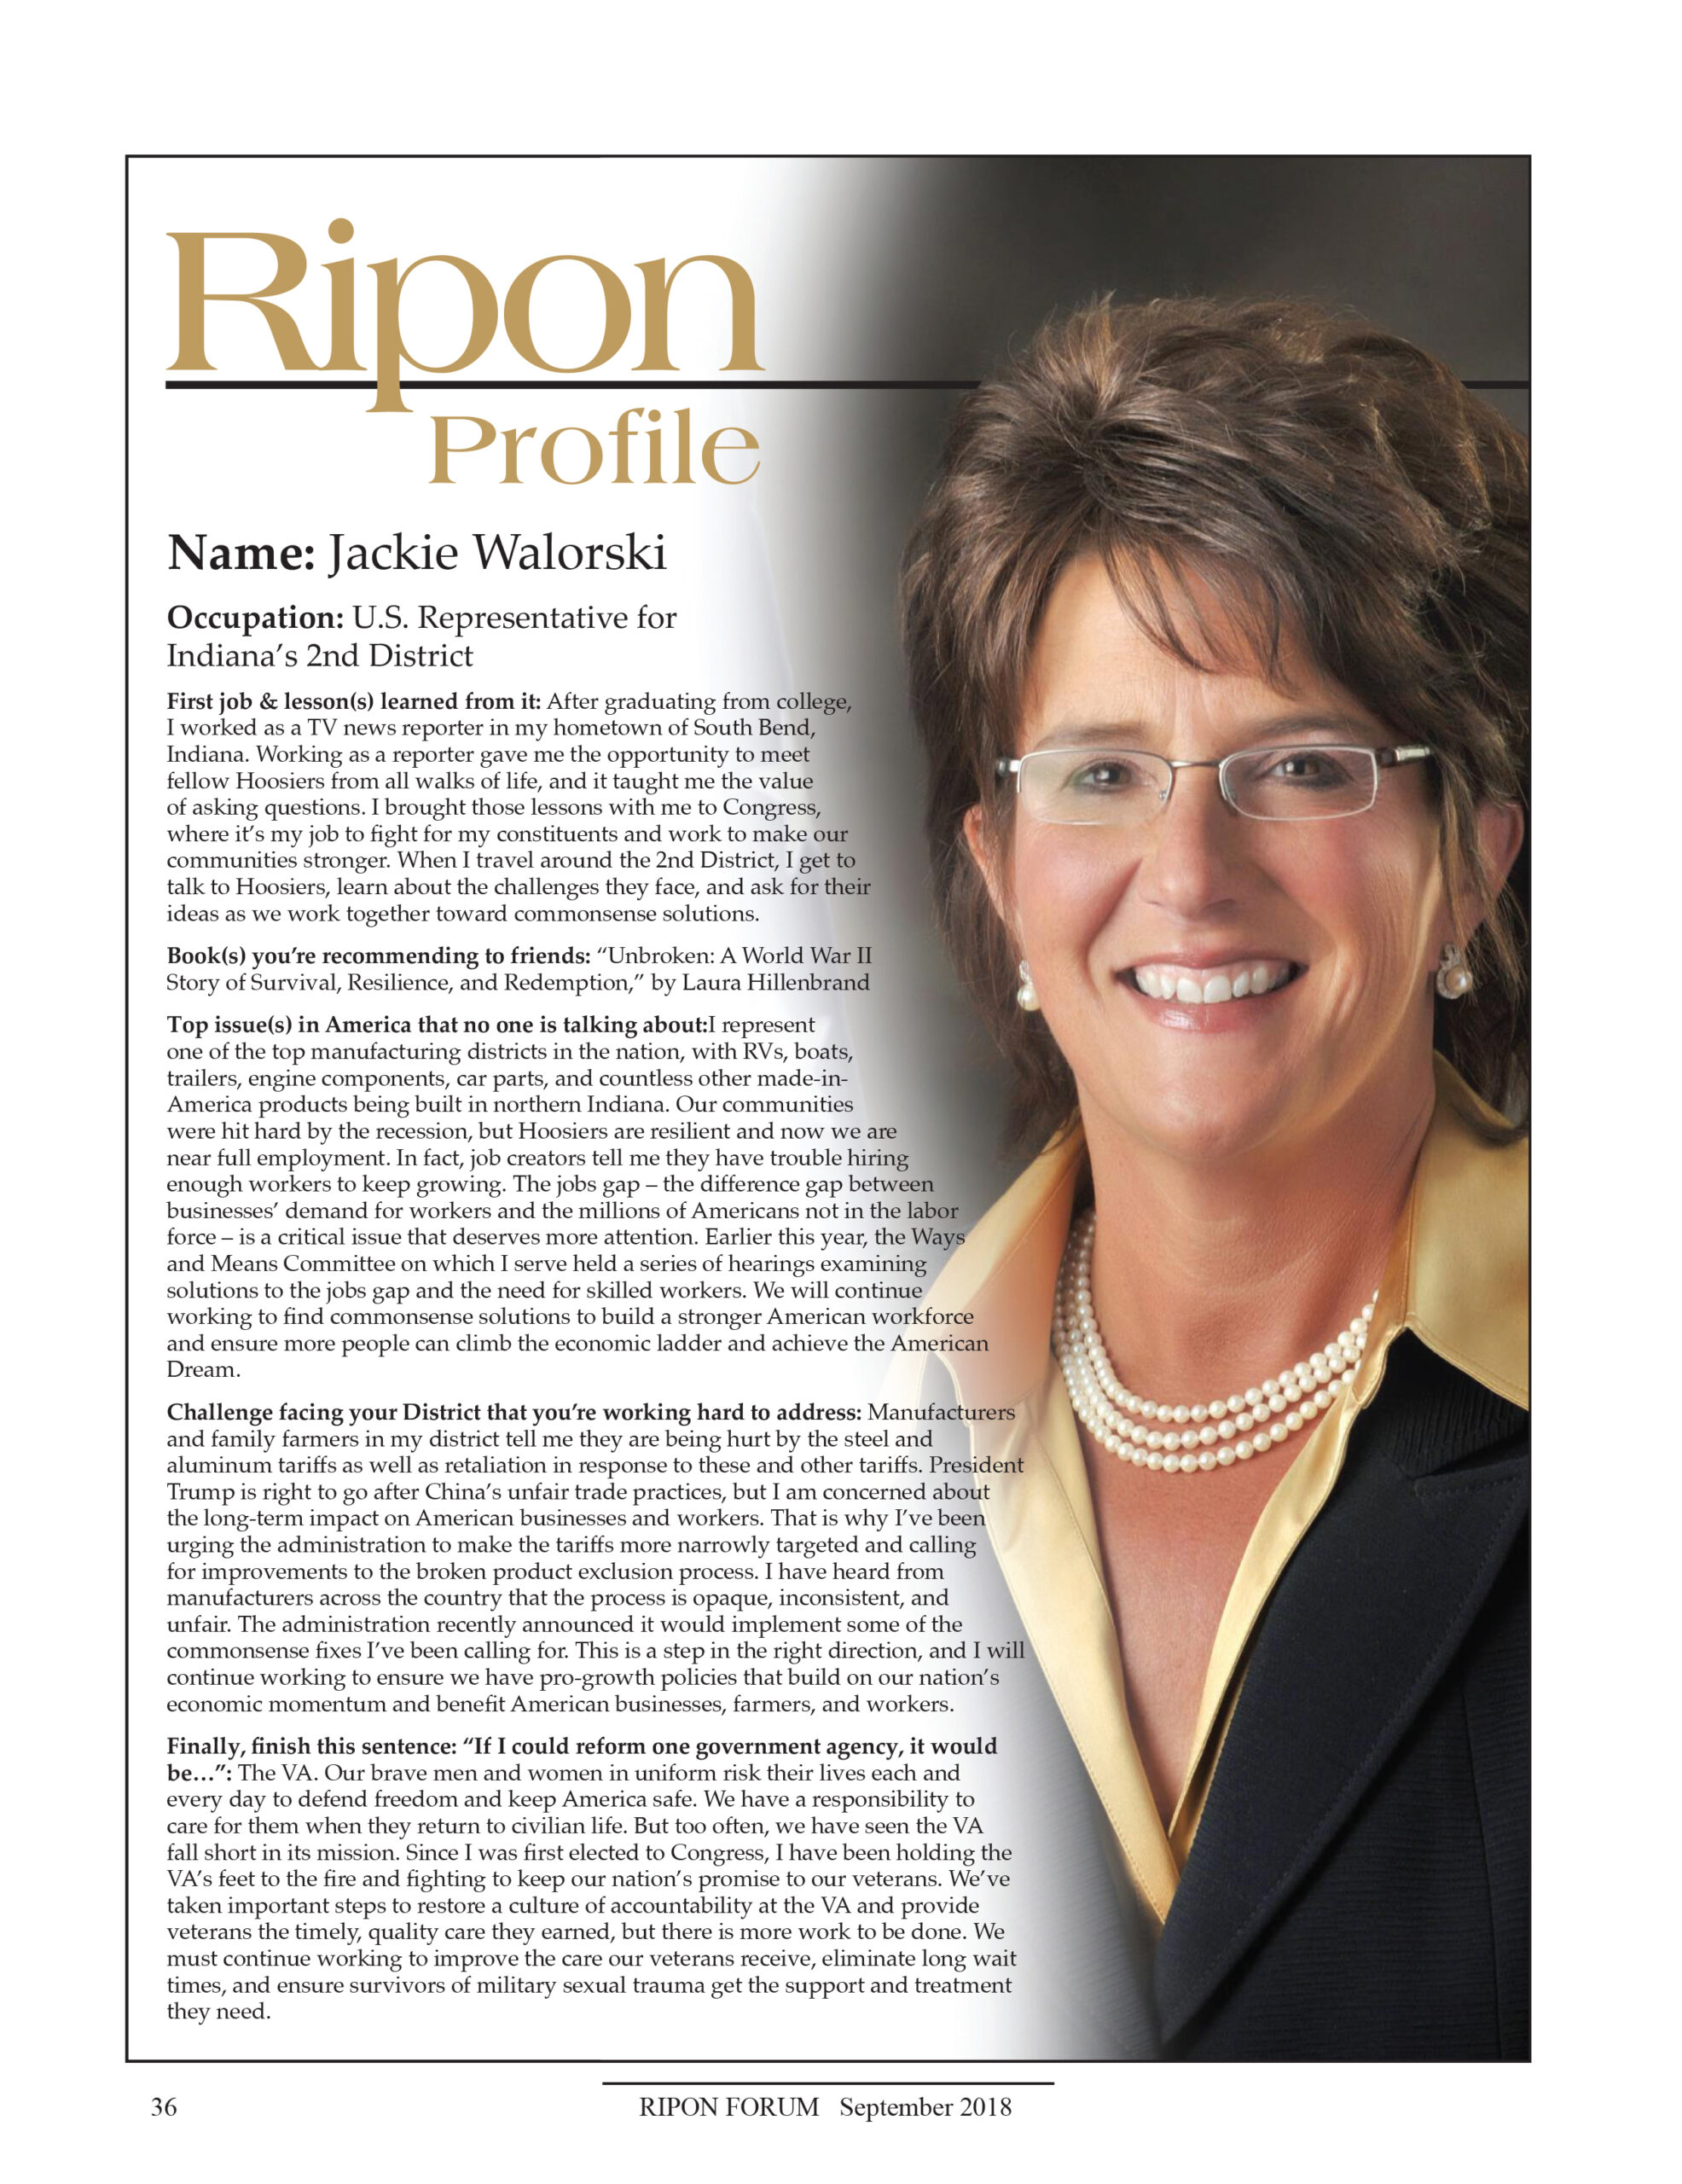 Ripon Profile of Jackie Walorski